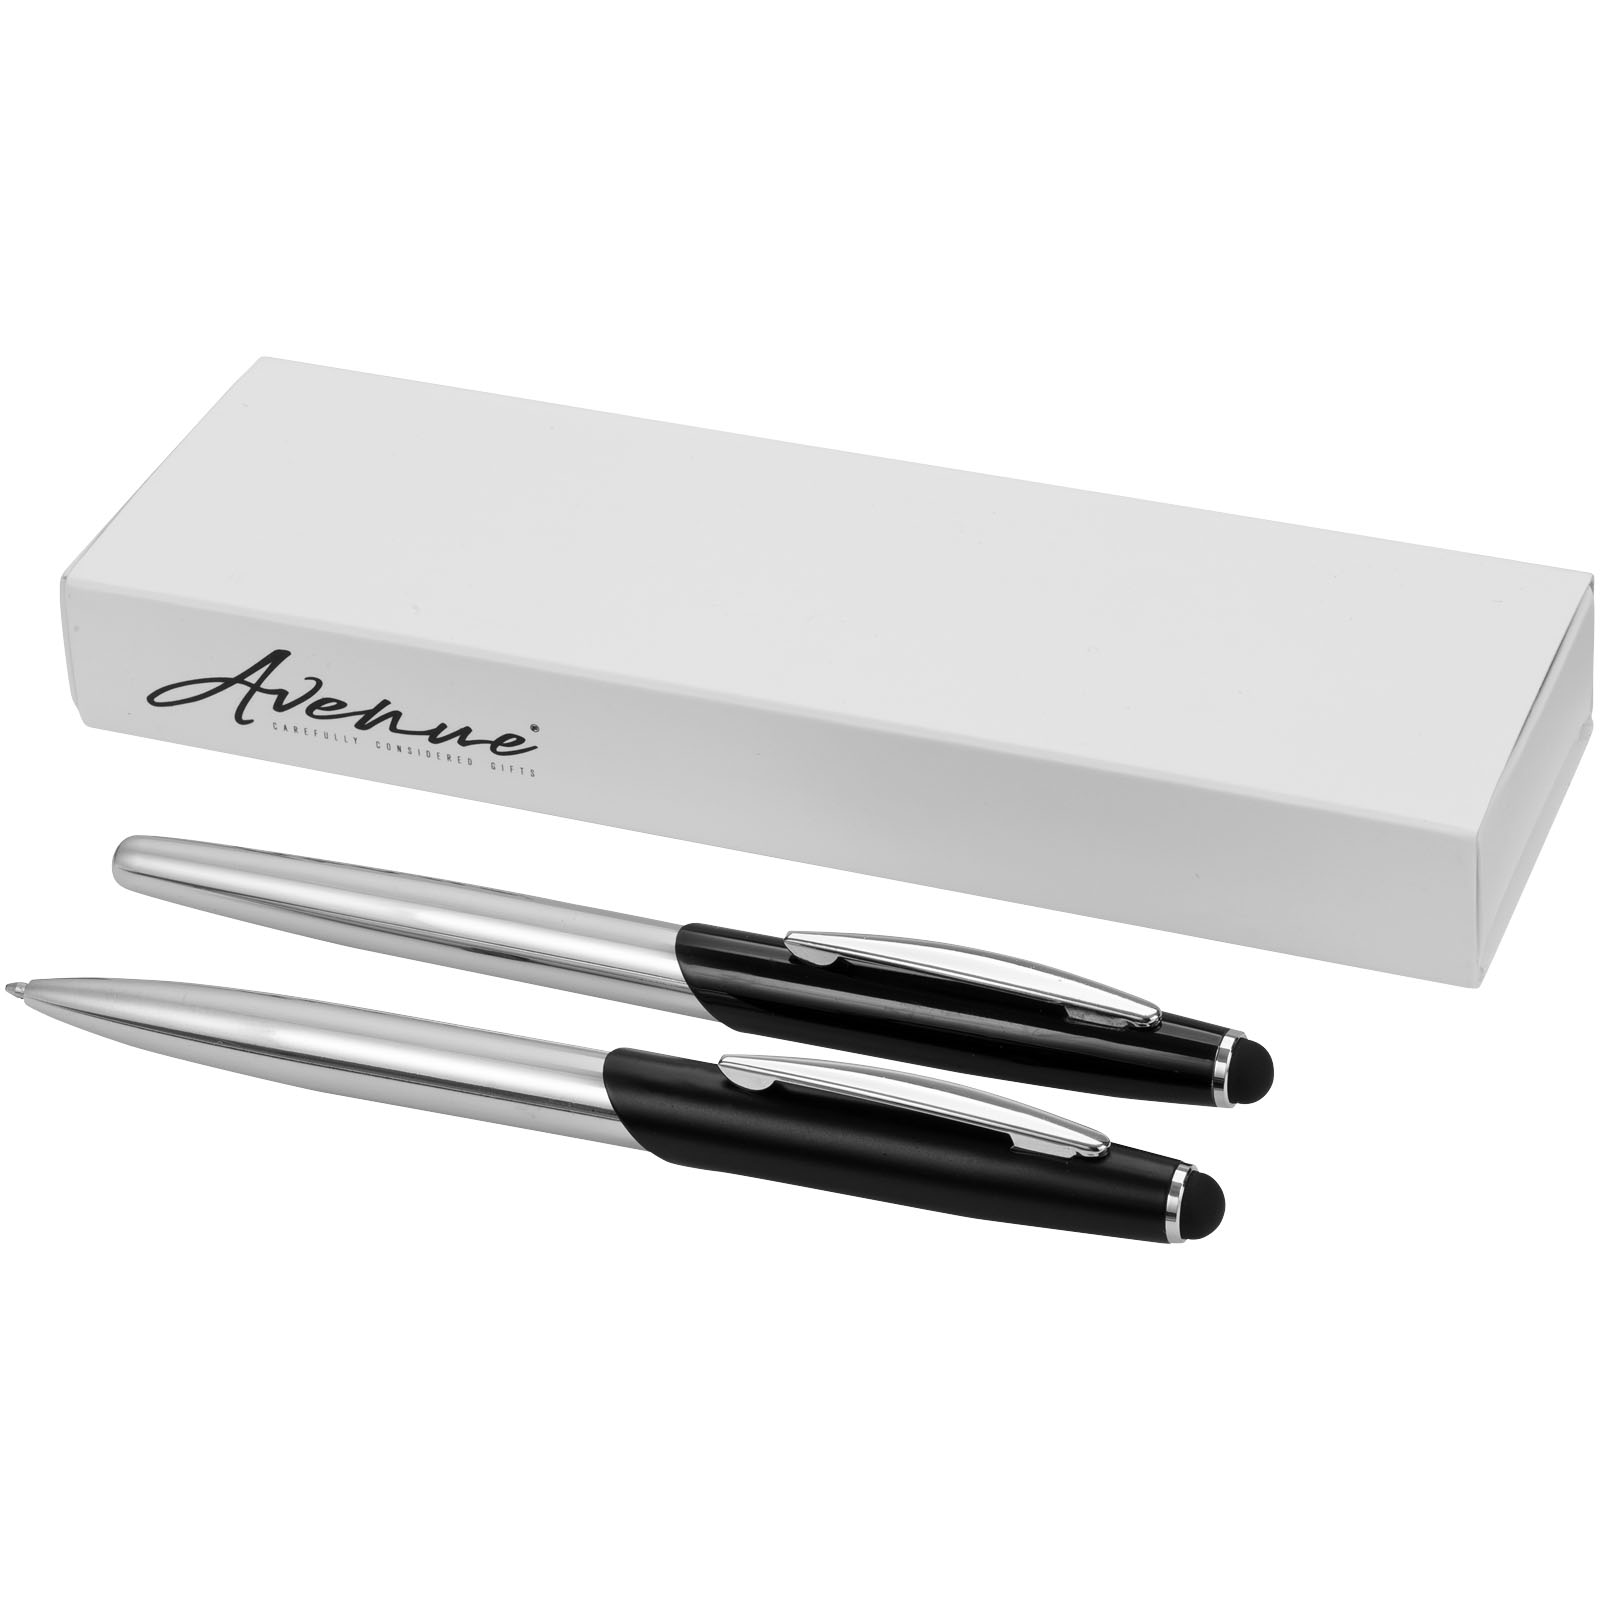 Advertising Ballpoint Pens - Geneva stylus ballpoint pen and rollerball pen set - 0